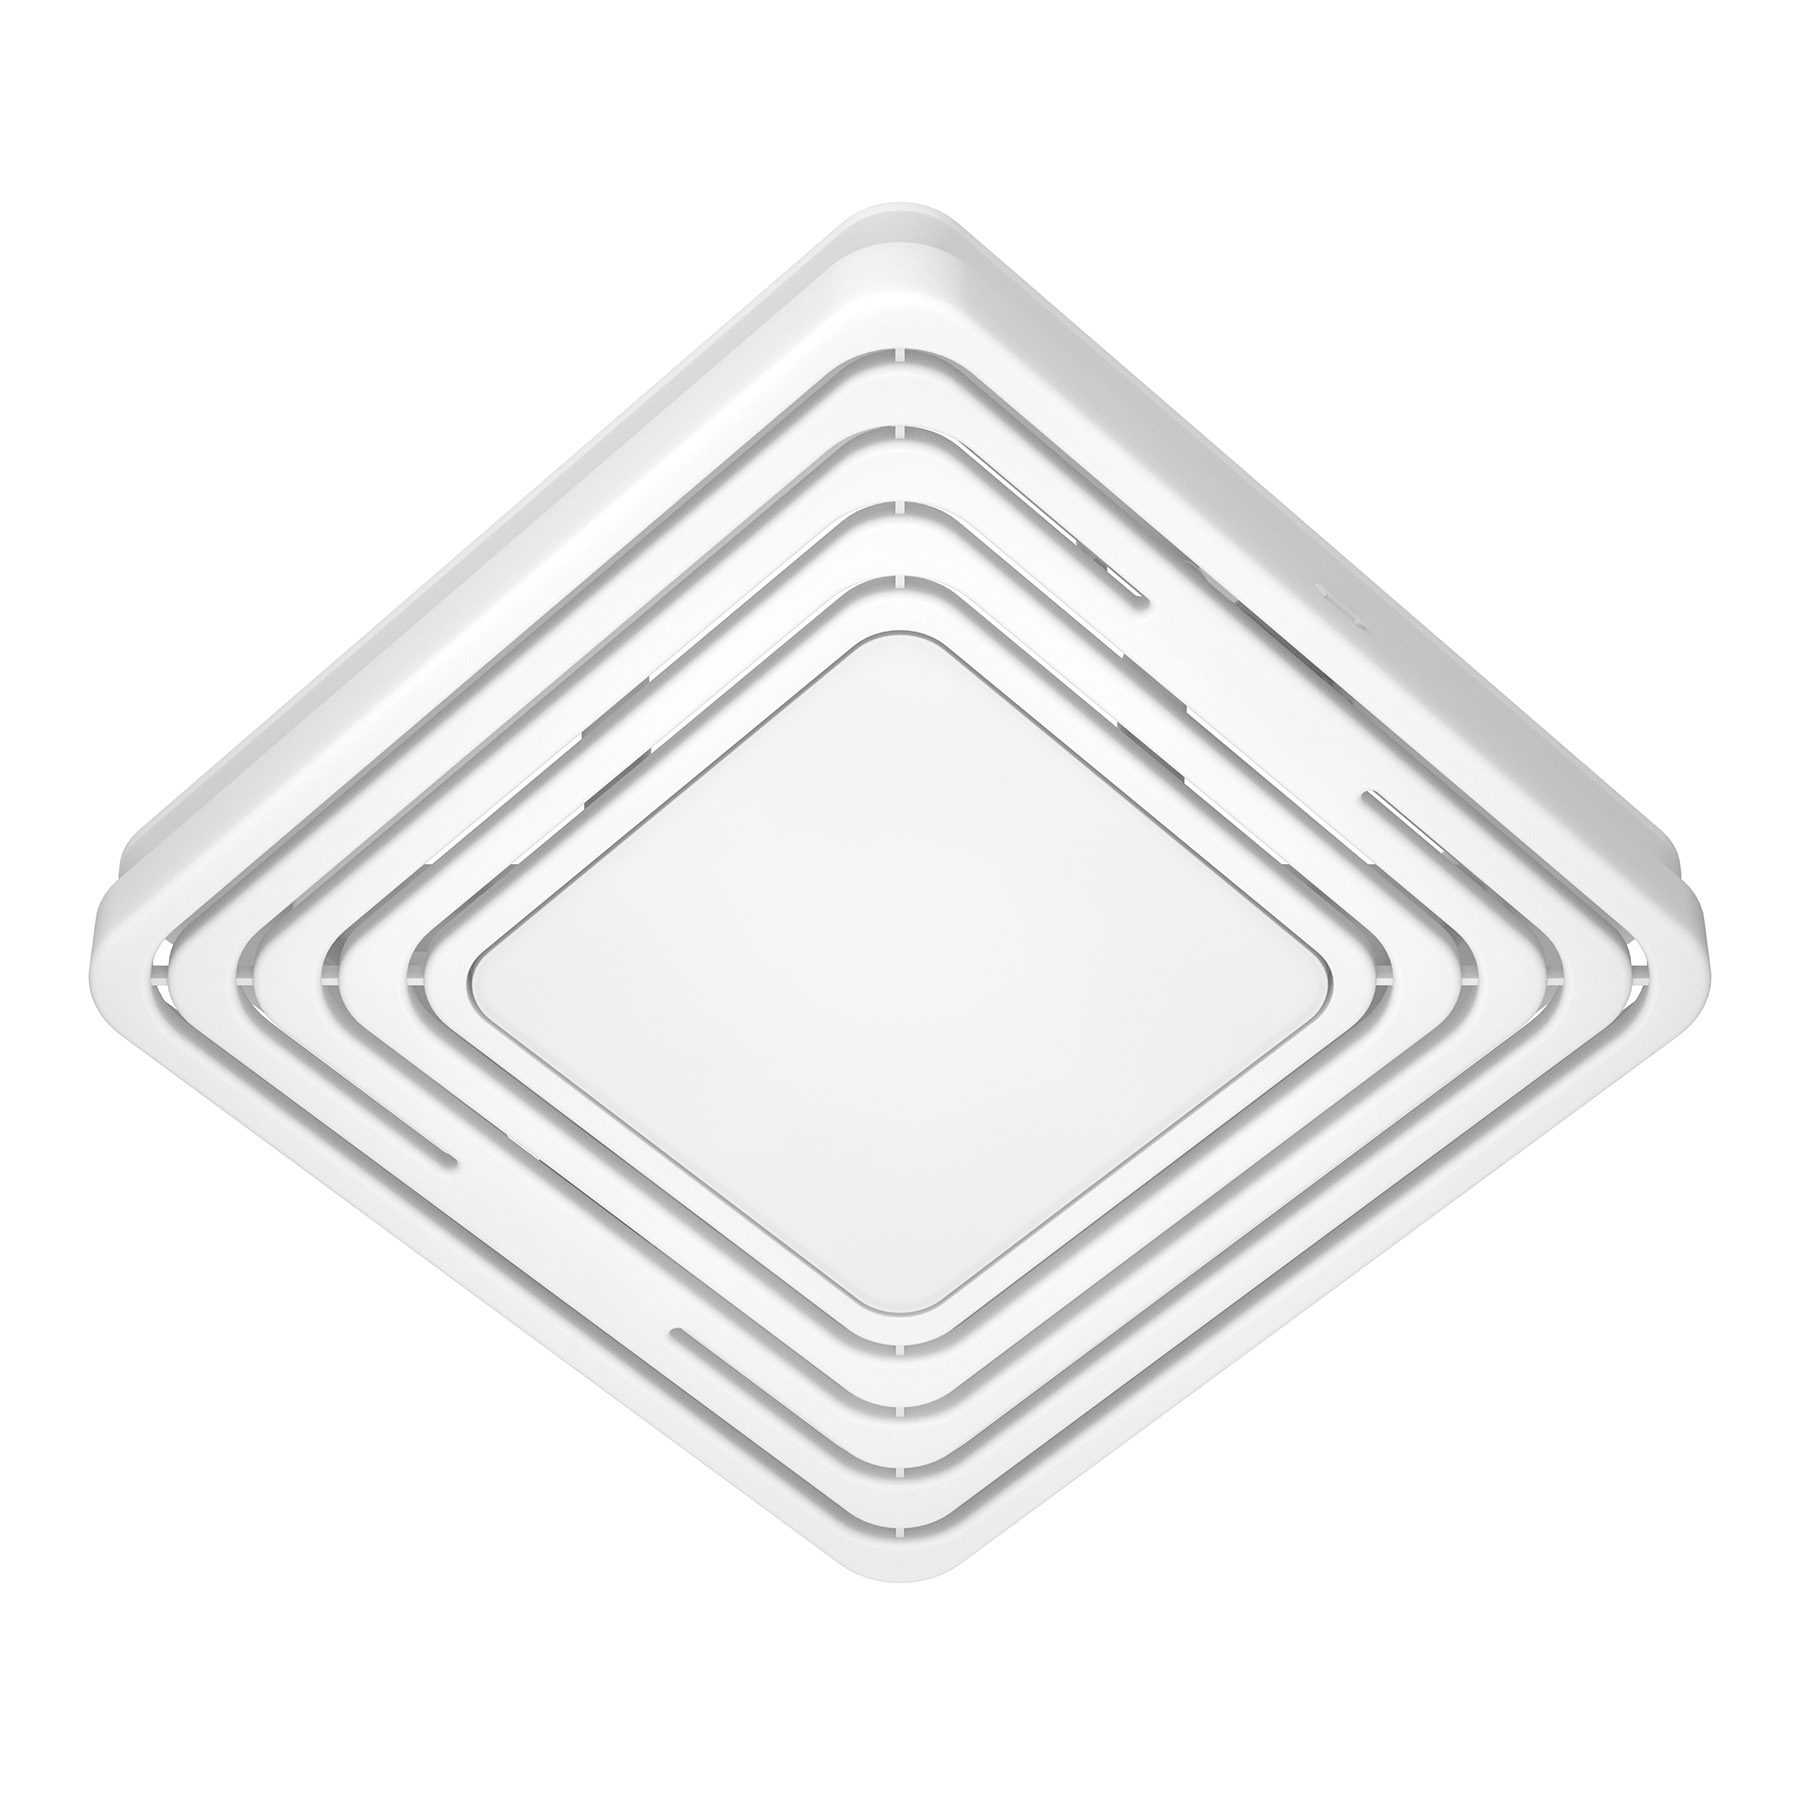 Broan-NuTone® Roomside Series 50 CFM 0.7 Sones Ventilation Fan with LED Light ENERGY STAR®